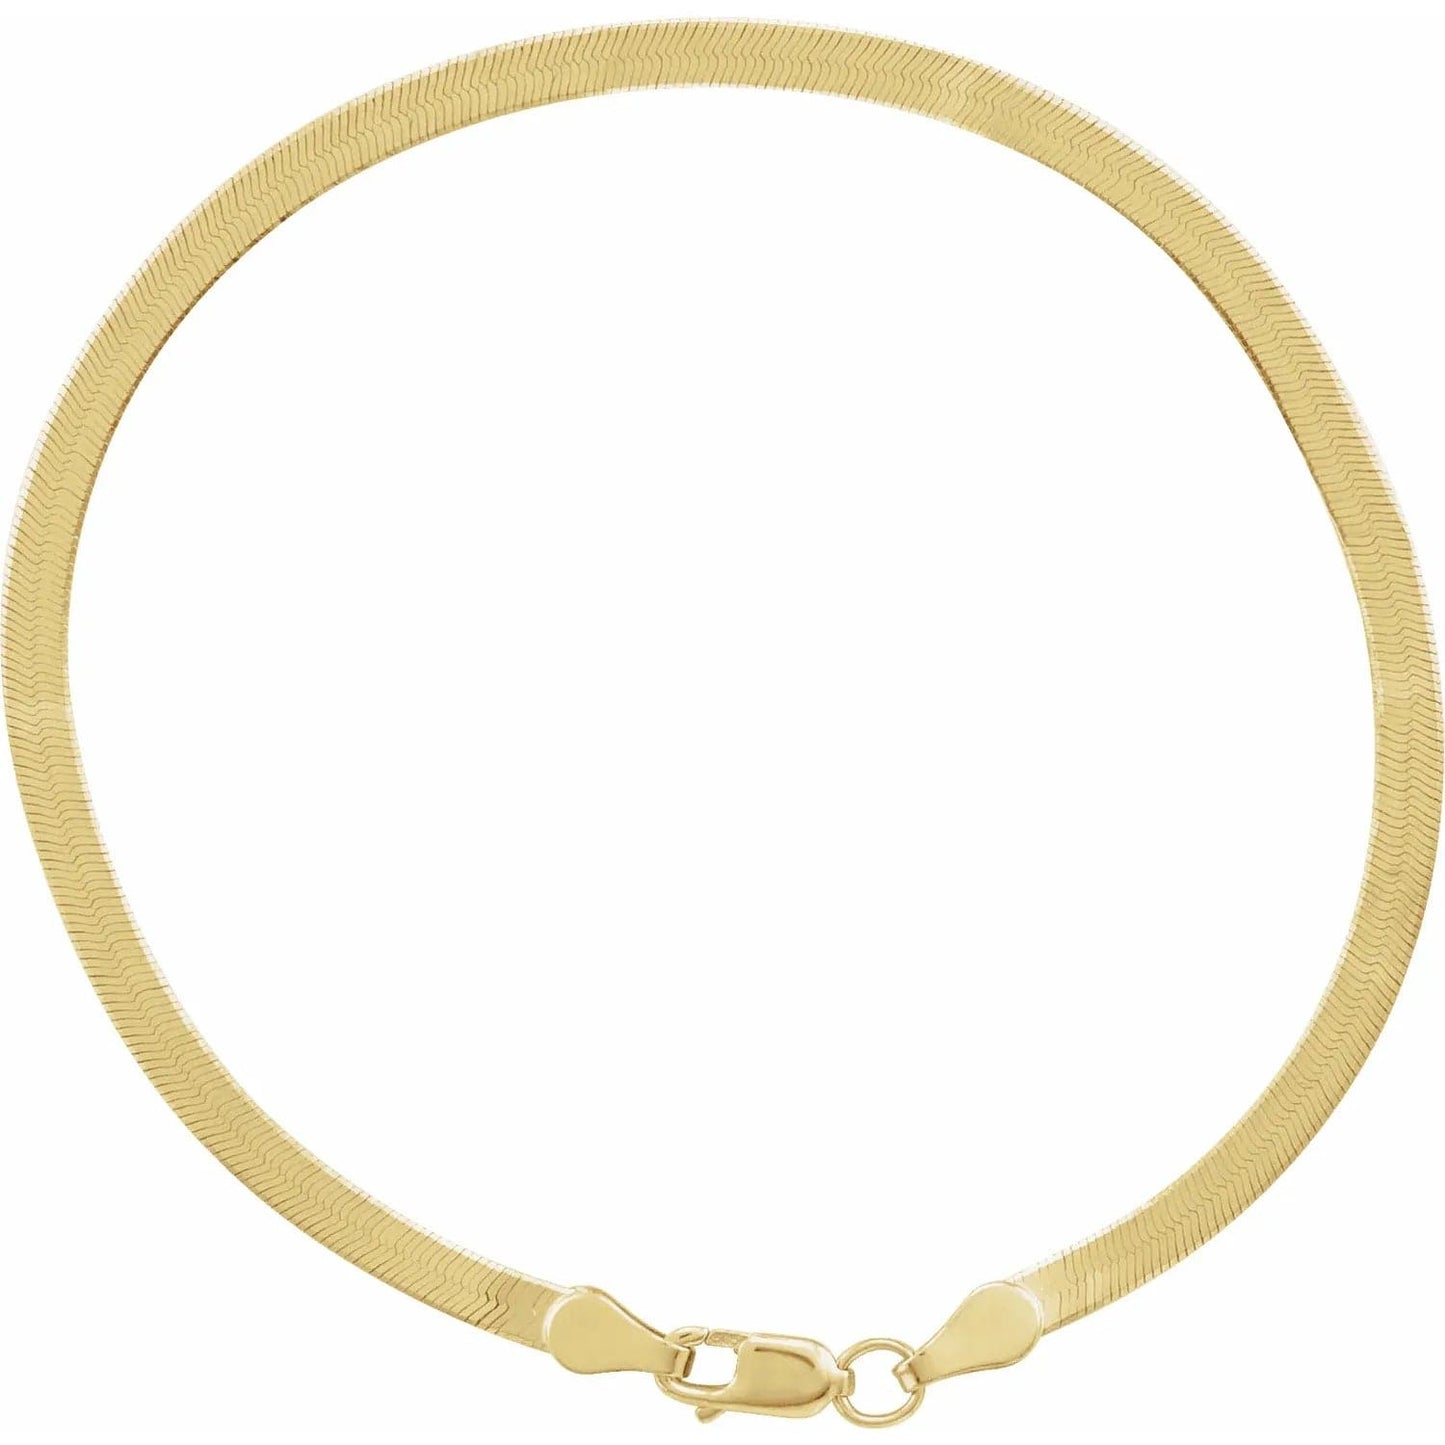 Save On Diamonds 14K Yellow / 2.8 mm Flexible Gold Herringbone Bracelet